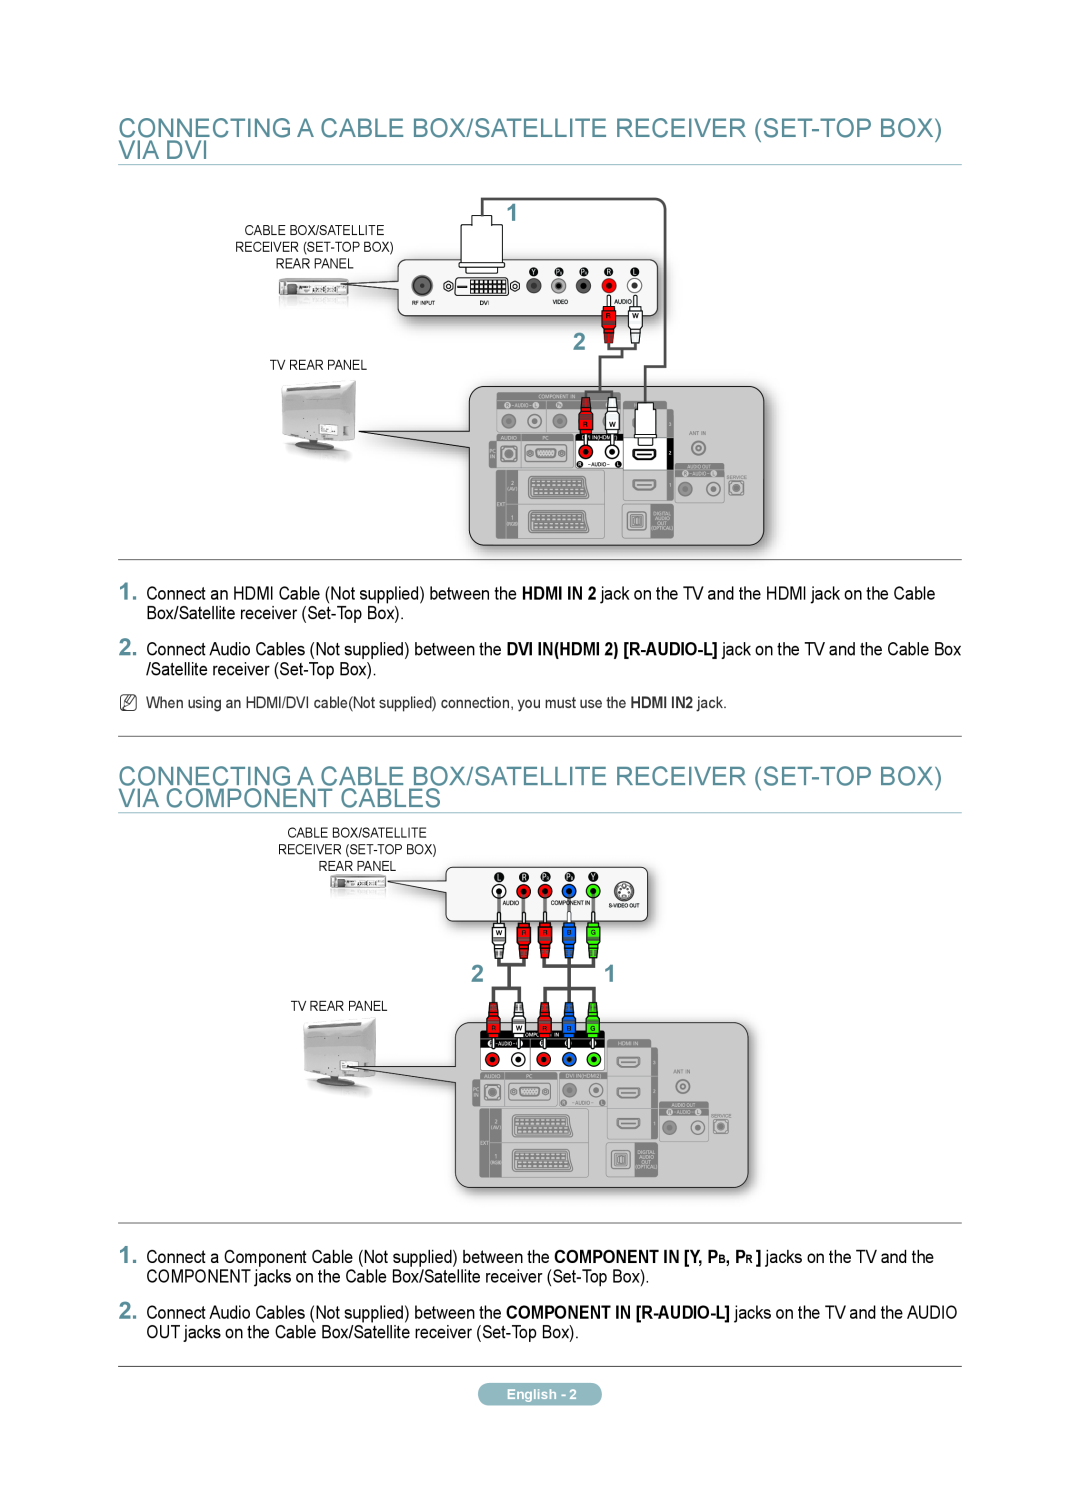 Samsung Series C6 quick start Connecting a Cable Box/Satellite receiver Set-Top Box via DVI, English 